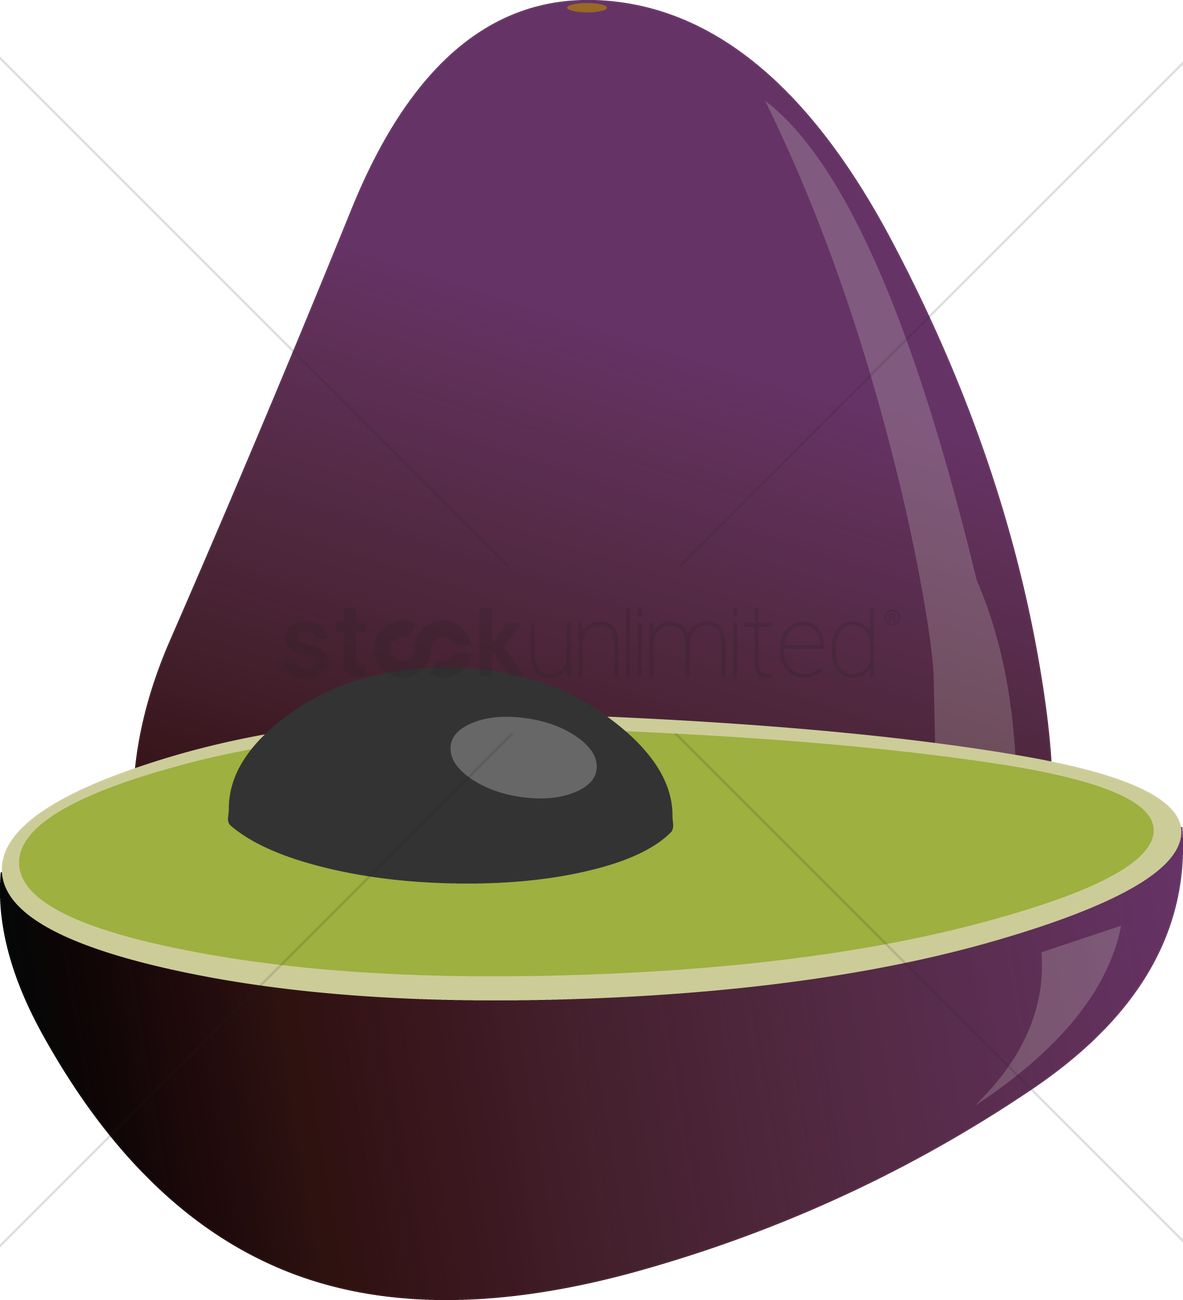 Avocado over a white background Vector Image